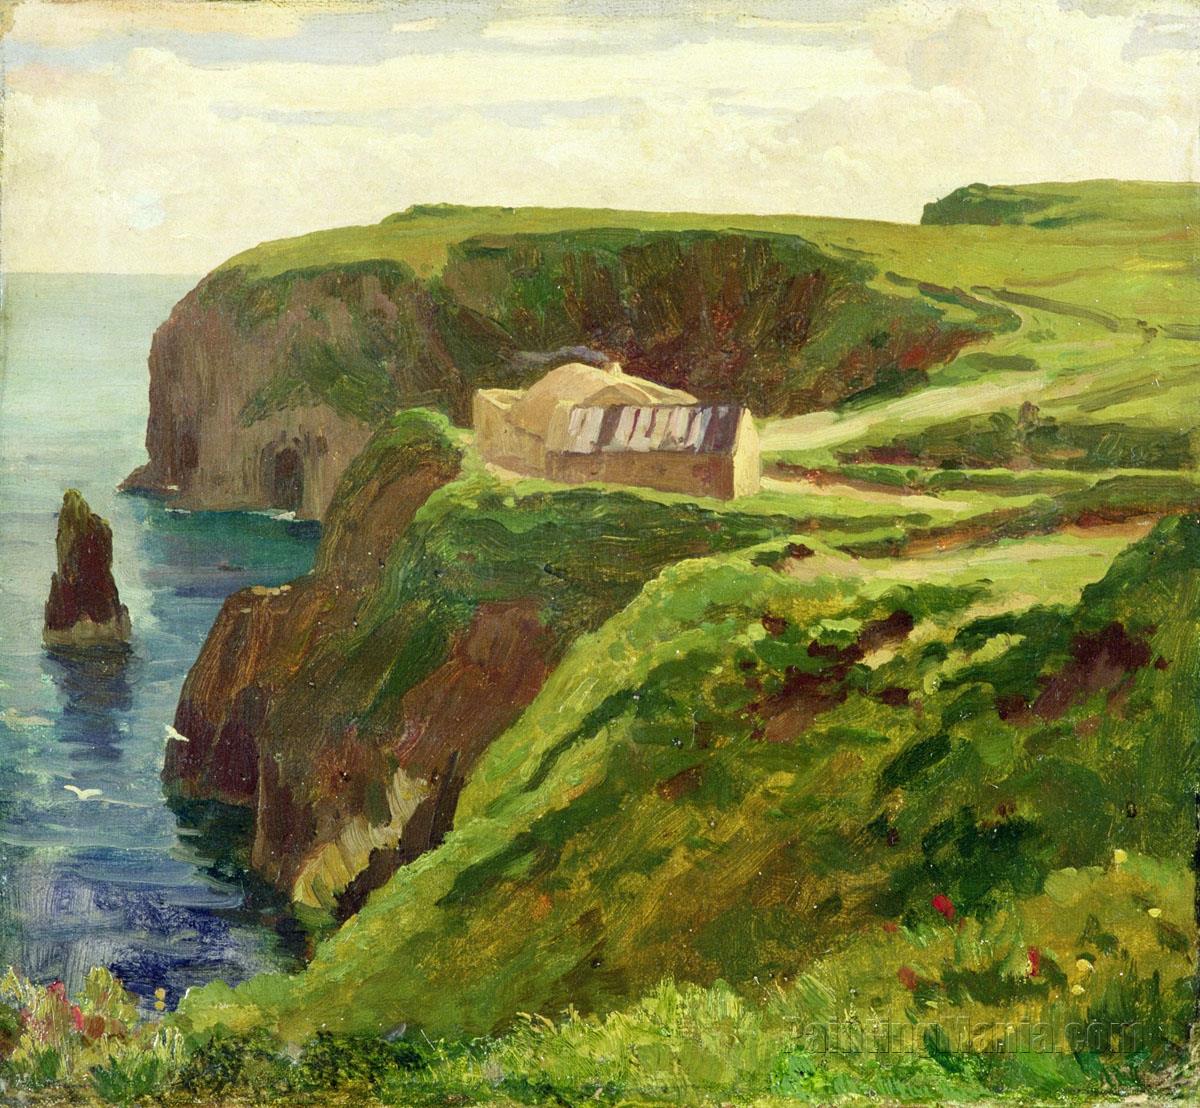 Malin Head, Donegal 1874